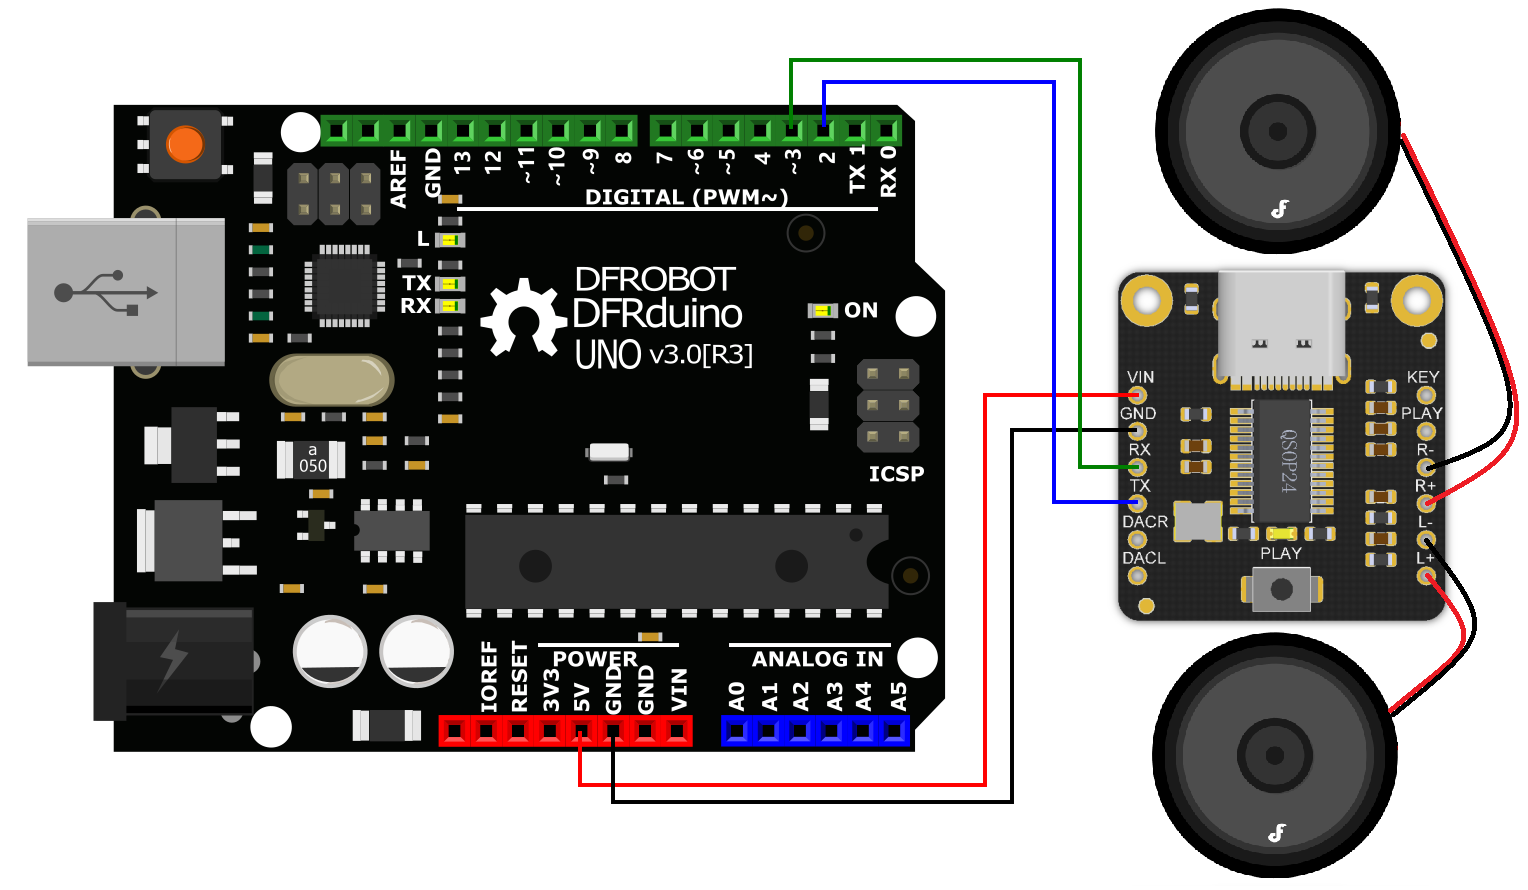 Mạch DFRobot Fermion: DFPlayer Pro - A mini MP3 Player with On-board 128MB Storage (Breakout)